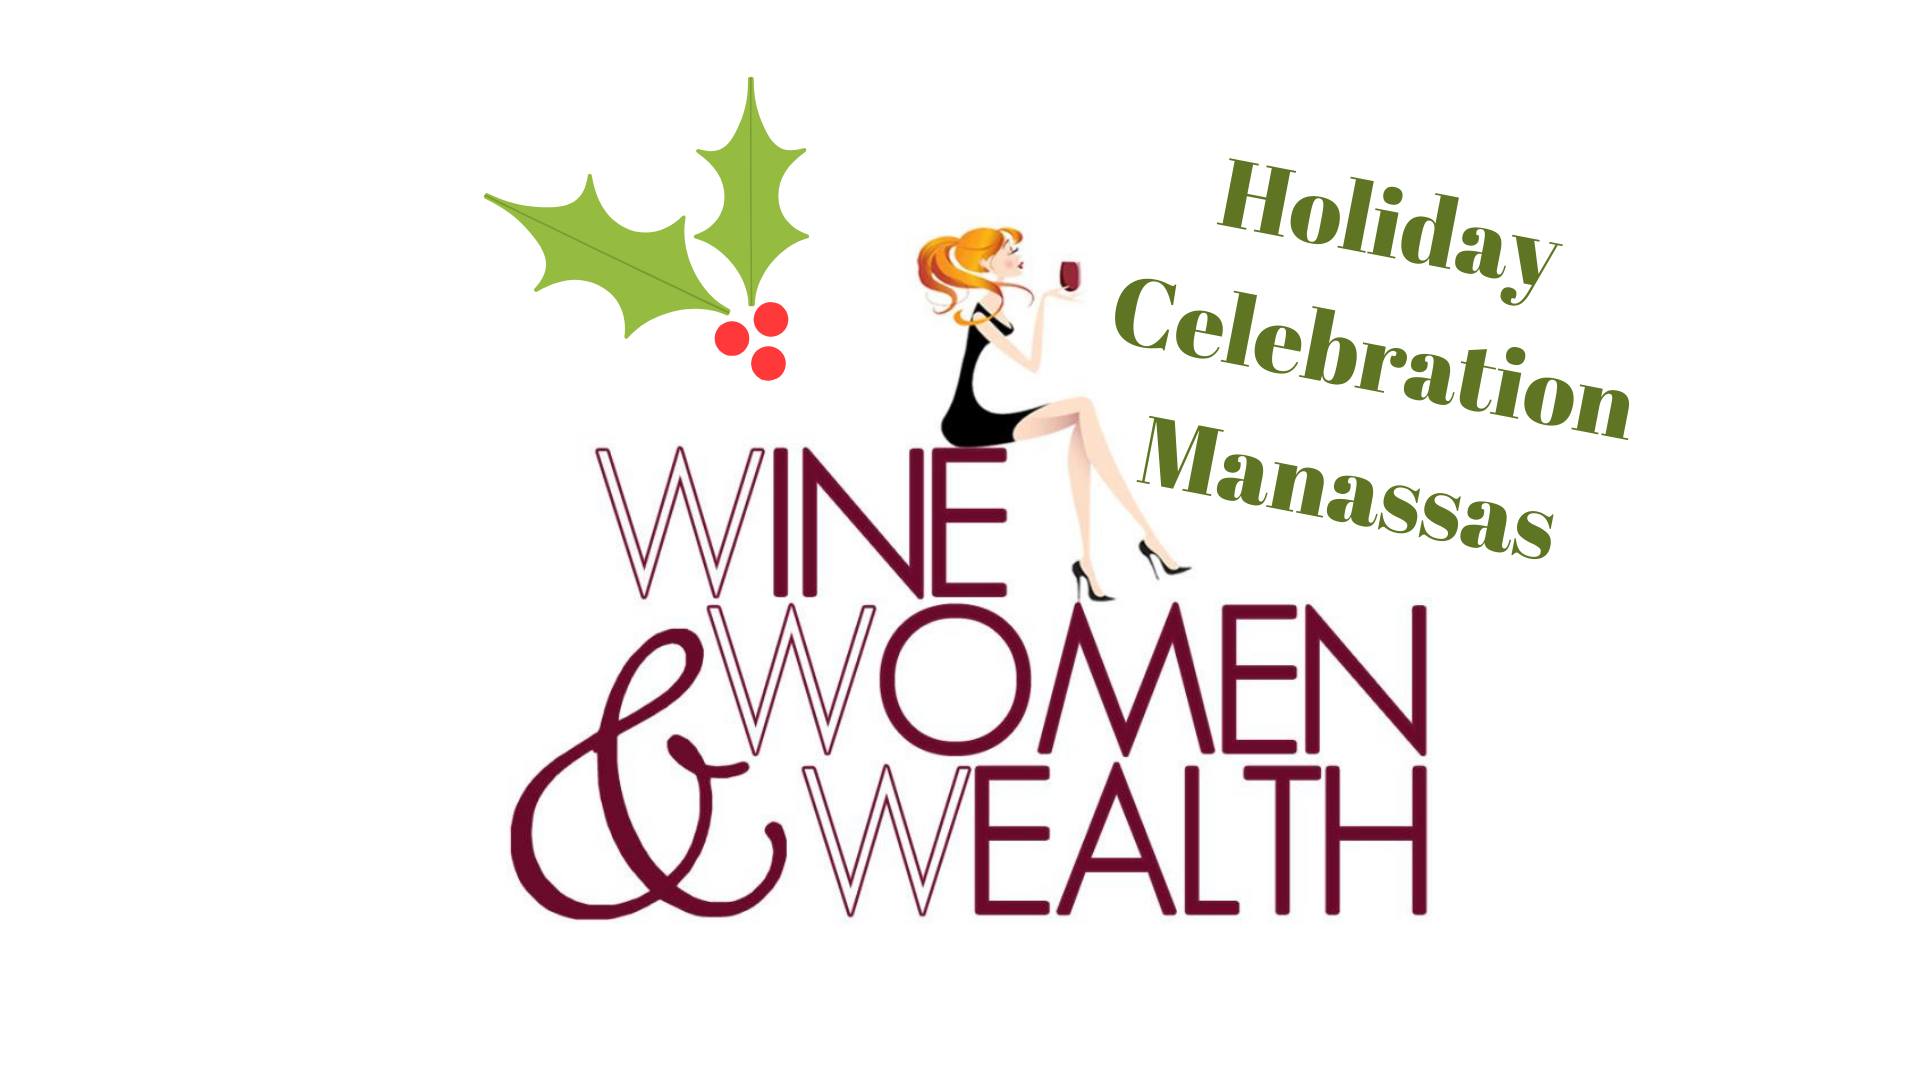 Manassas Logo - Wine, Women and Wealth - Historic Manassas